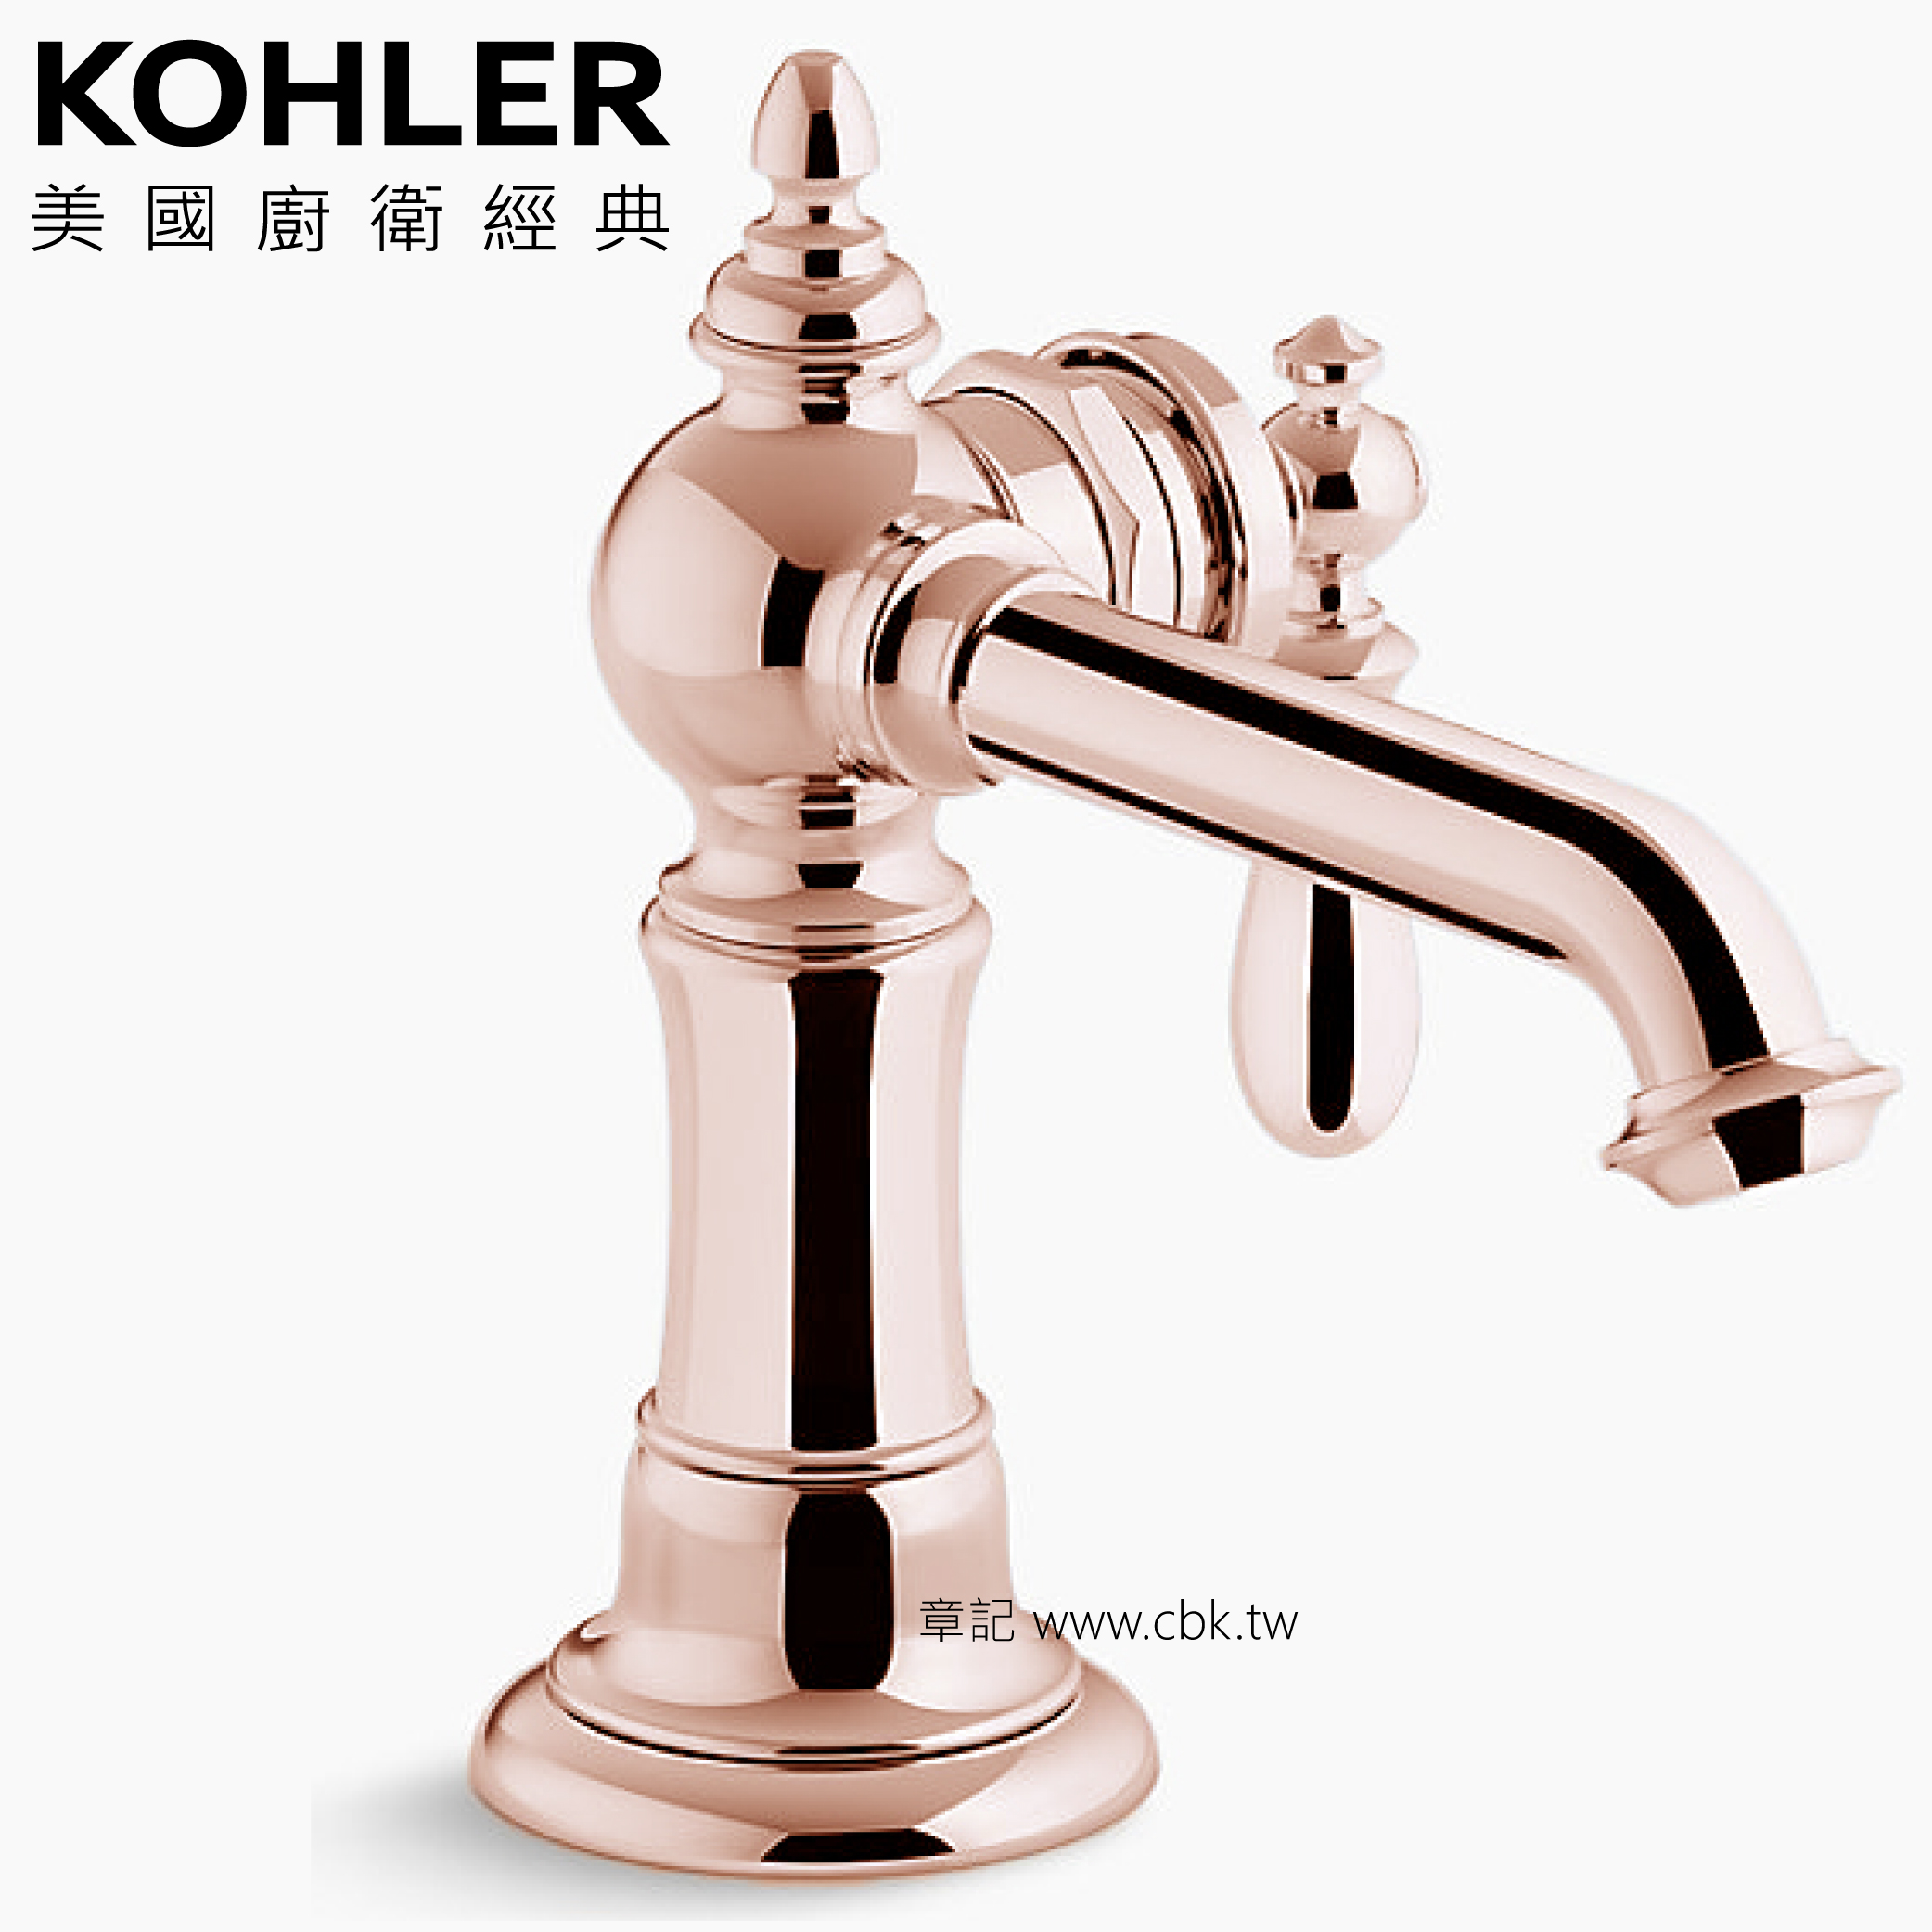 KOHLER Artifacts 面盆龍頭(玫瑰金) K-72762T-9M-RGD  |面盆 . 浴櫃|面盆龍頭